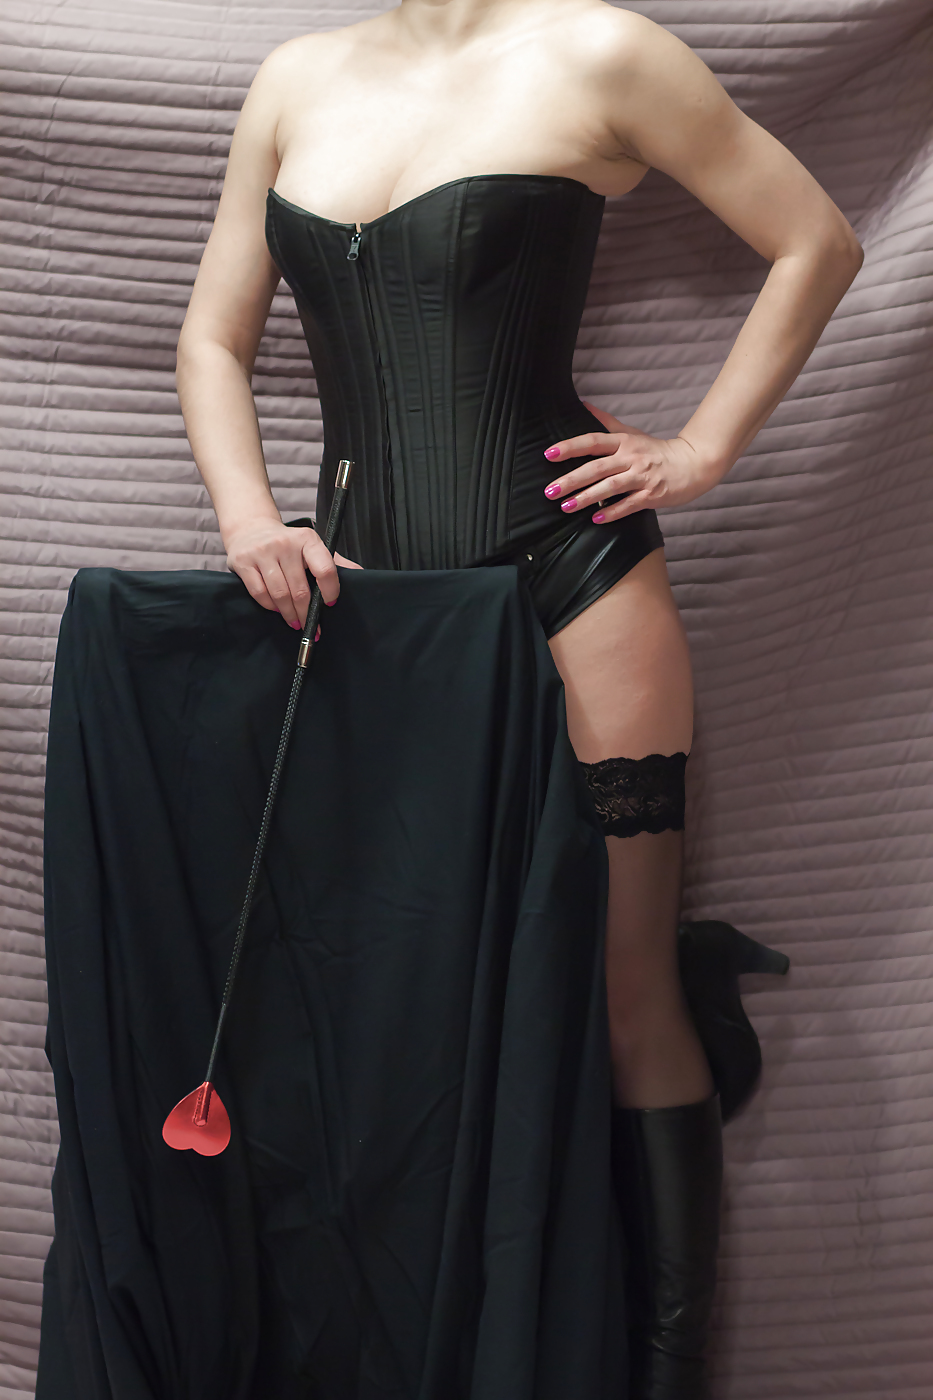 Mistress in black corset #18938059